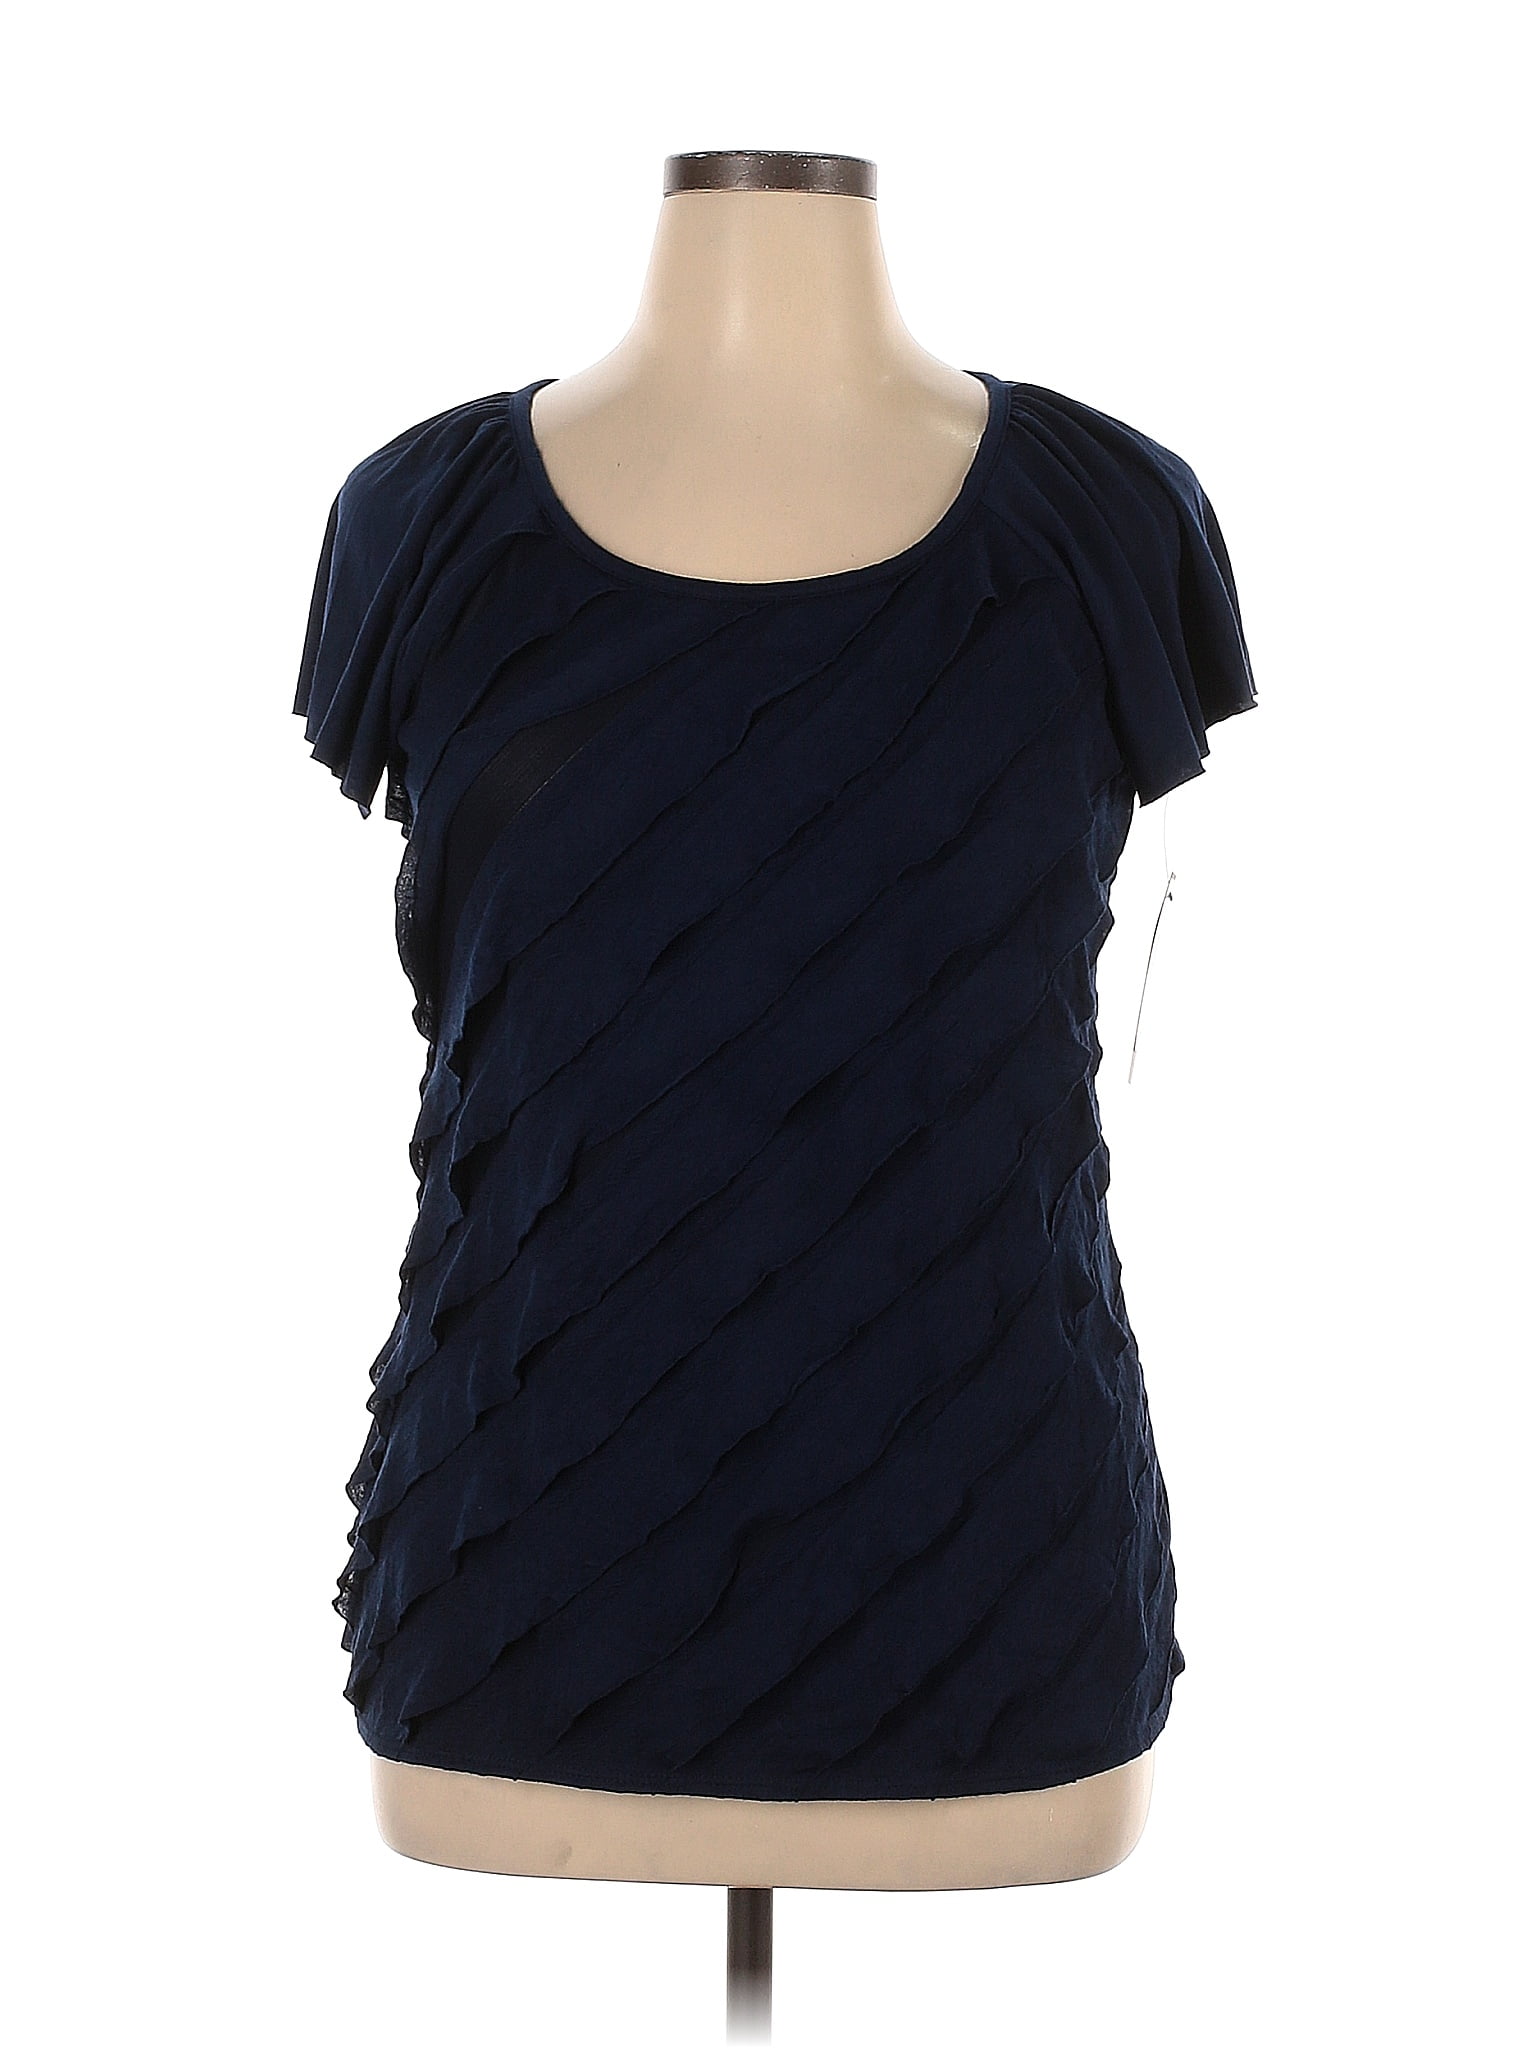 AB Studio Stripes Navy Blue Short Sleeve Top Size XL - 52% off | thredUP